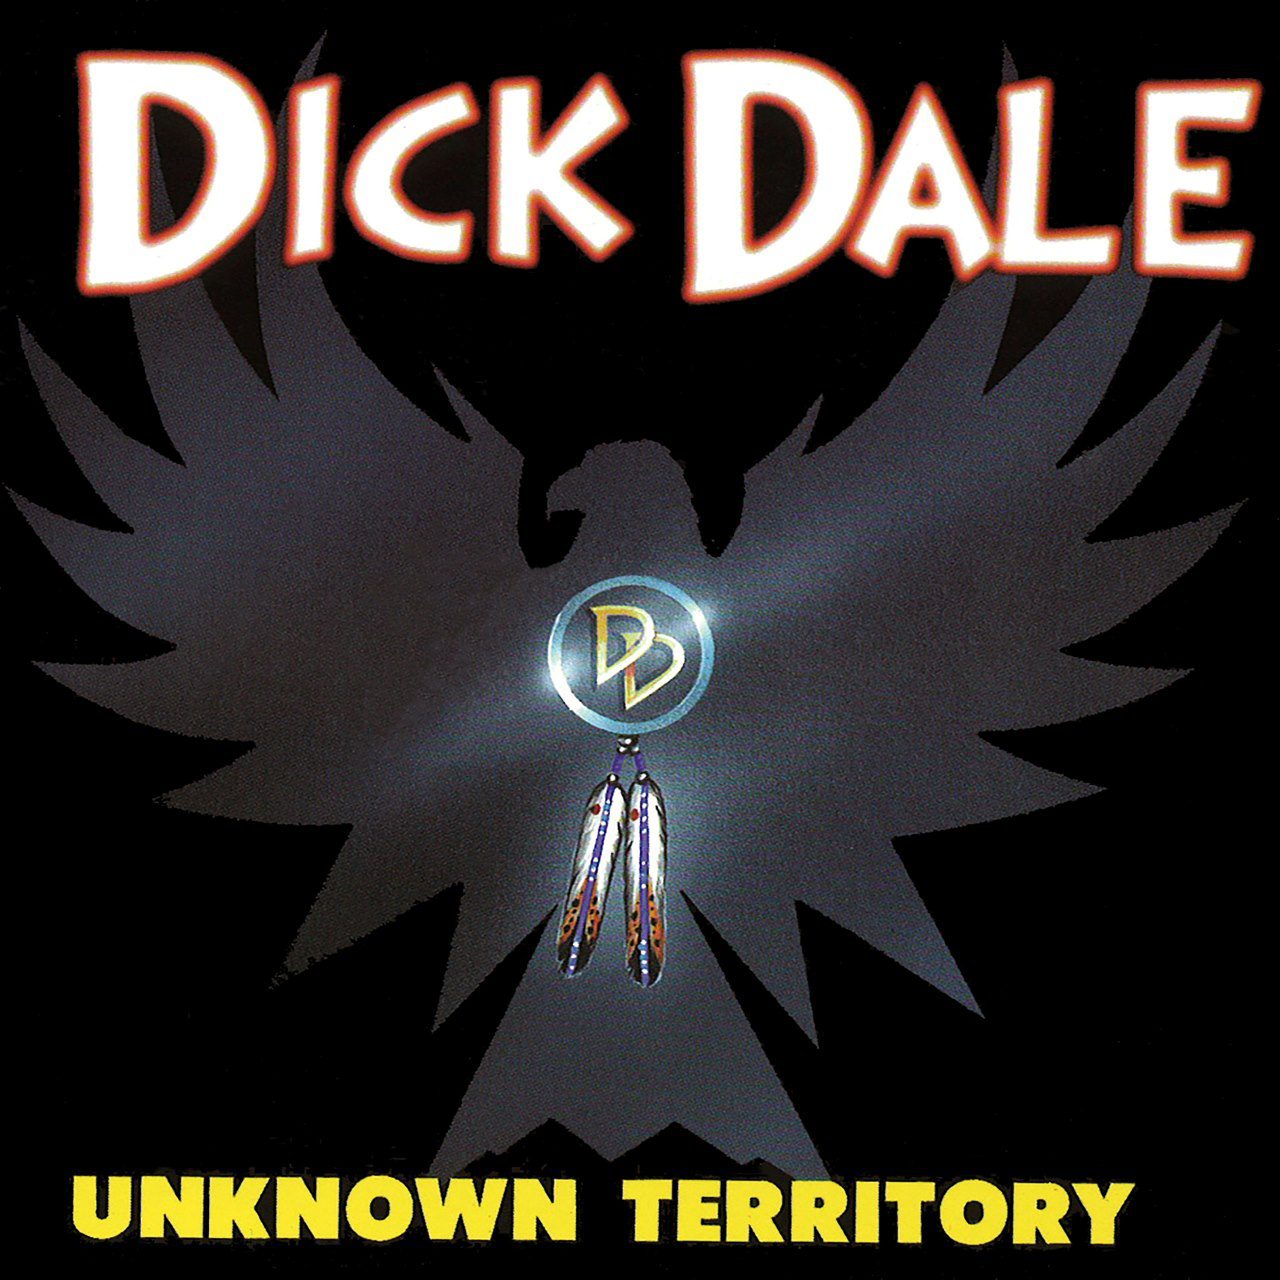 Dick Dale – Unknown Territory cover album